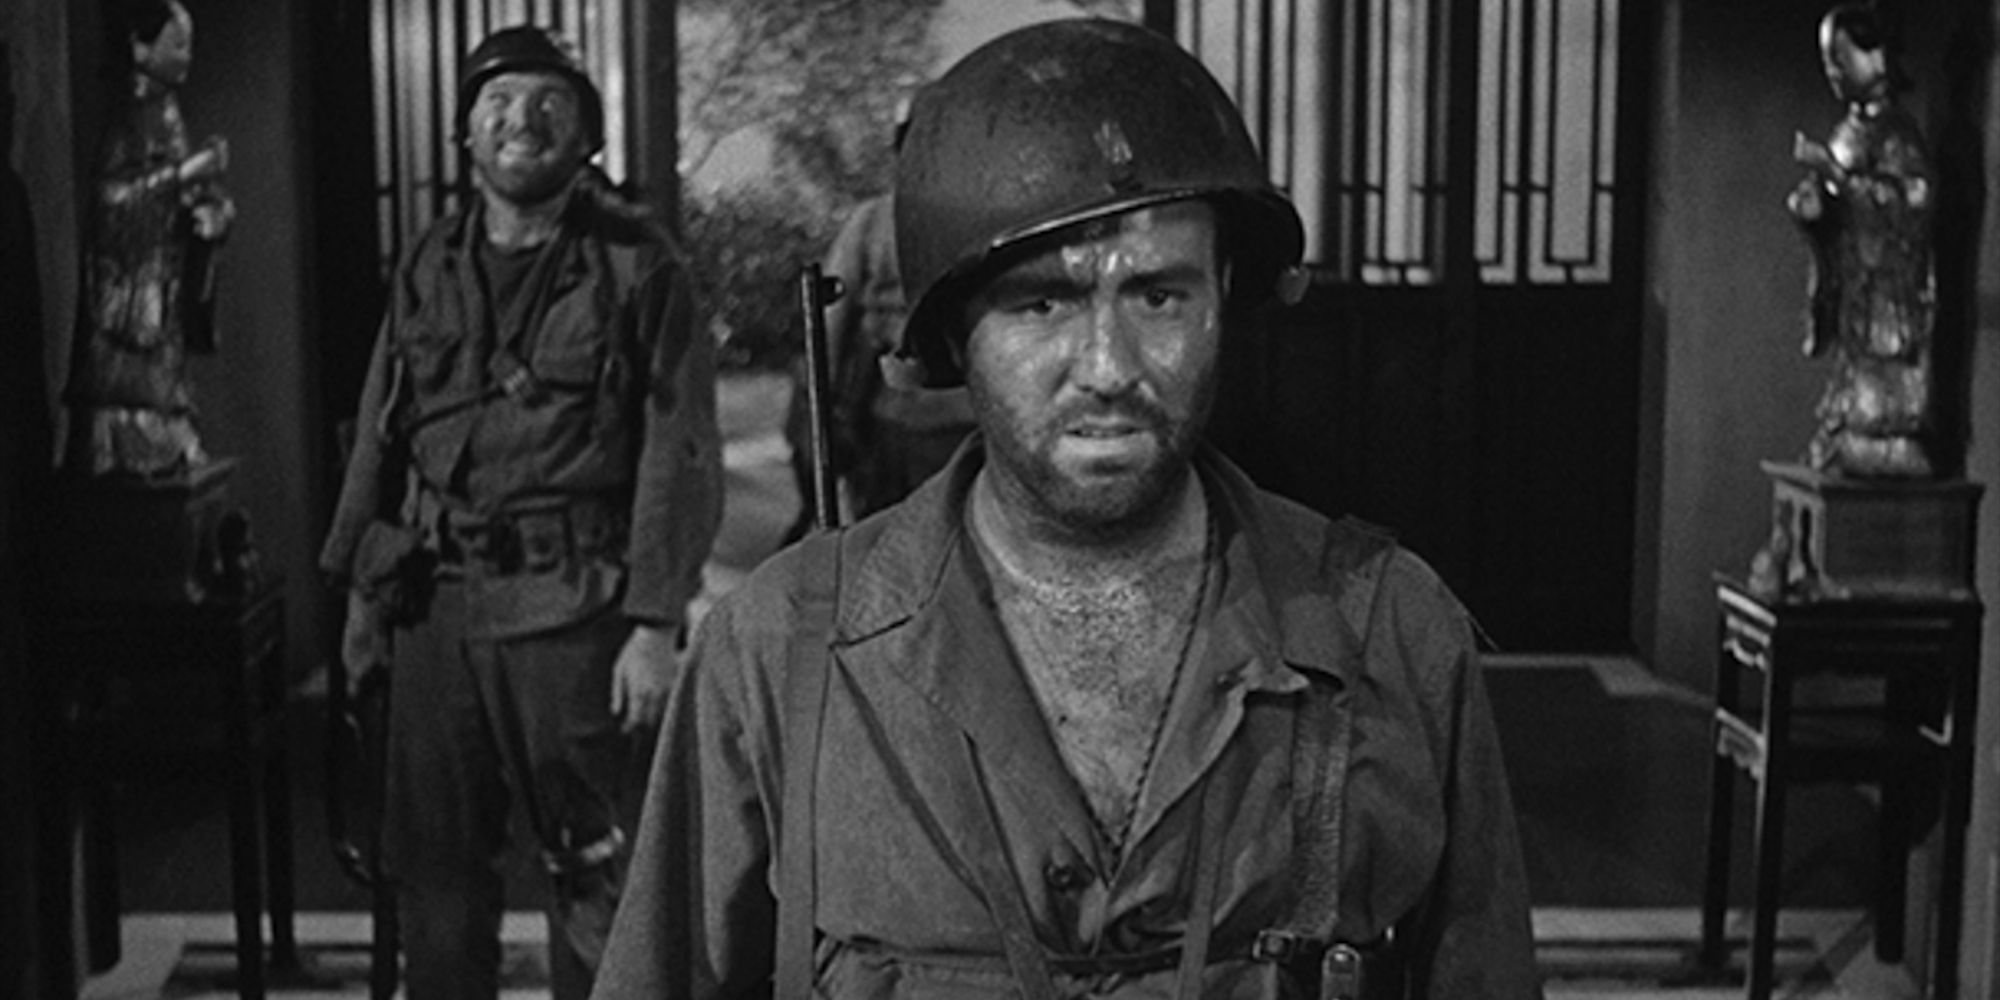 Steve Brodie as Lt. Driscoll looking worried with Gene Evans as Zack smiling in the background in The Steel Helmet